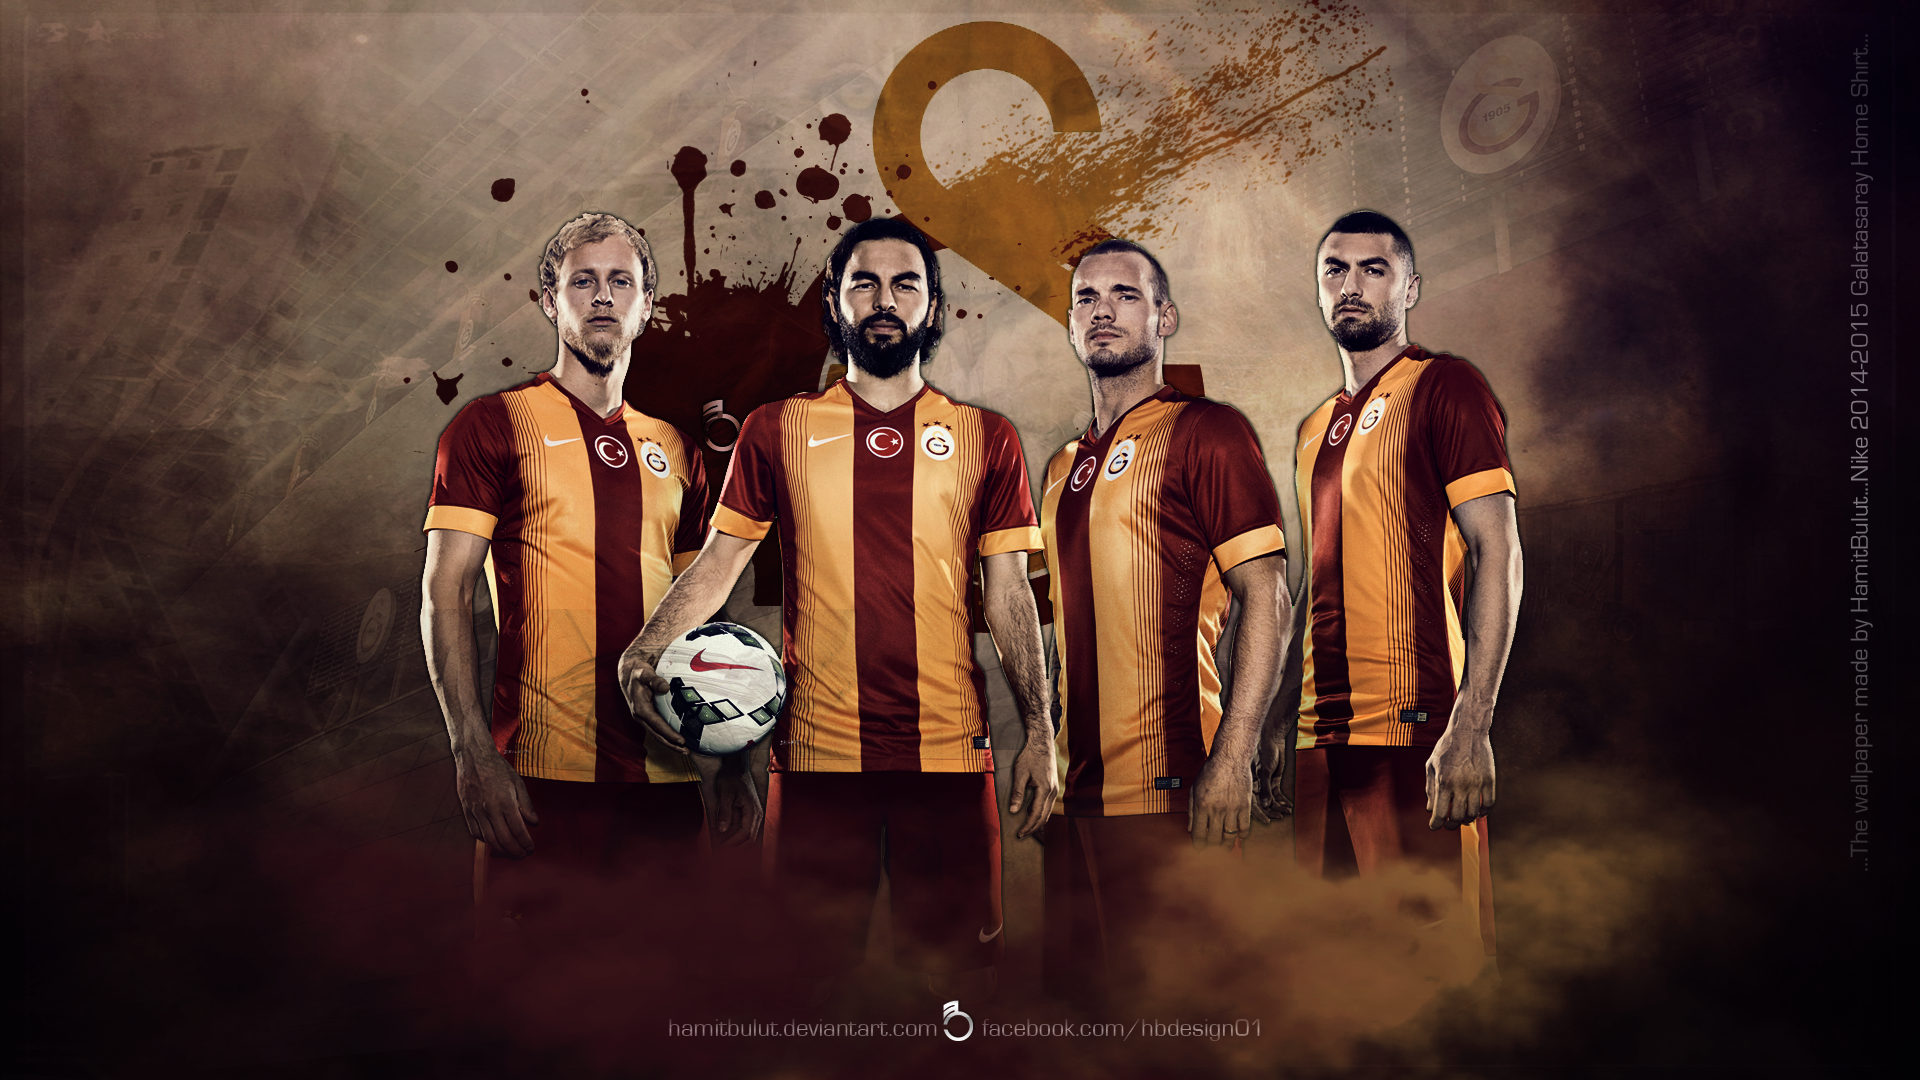 Galatasaray Wallpaper by HamitBulut on DeviantArt